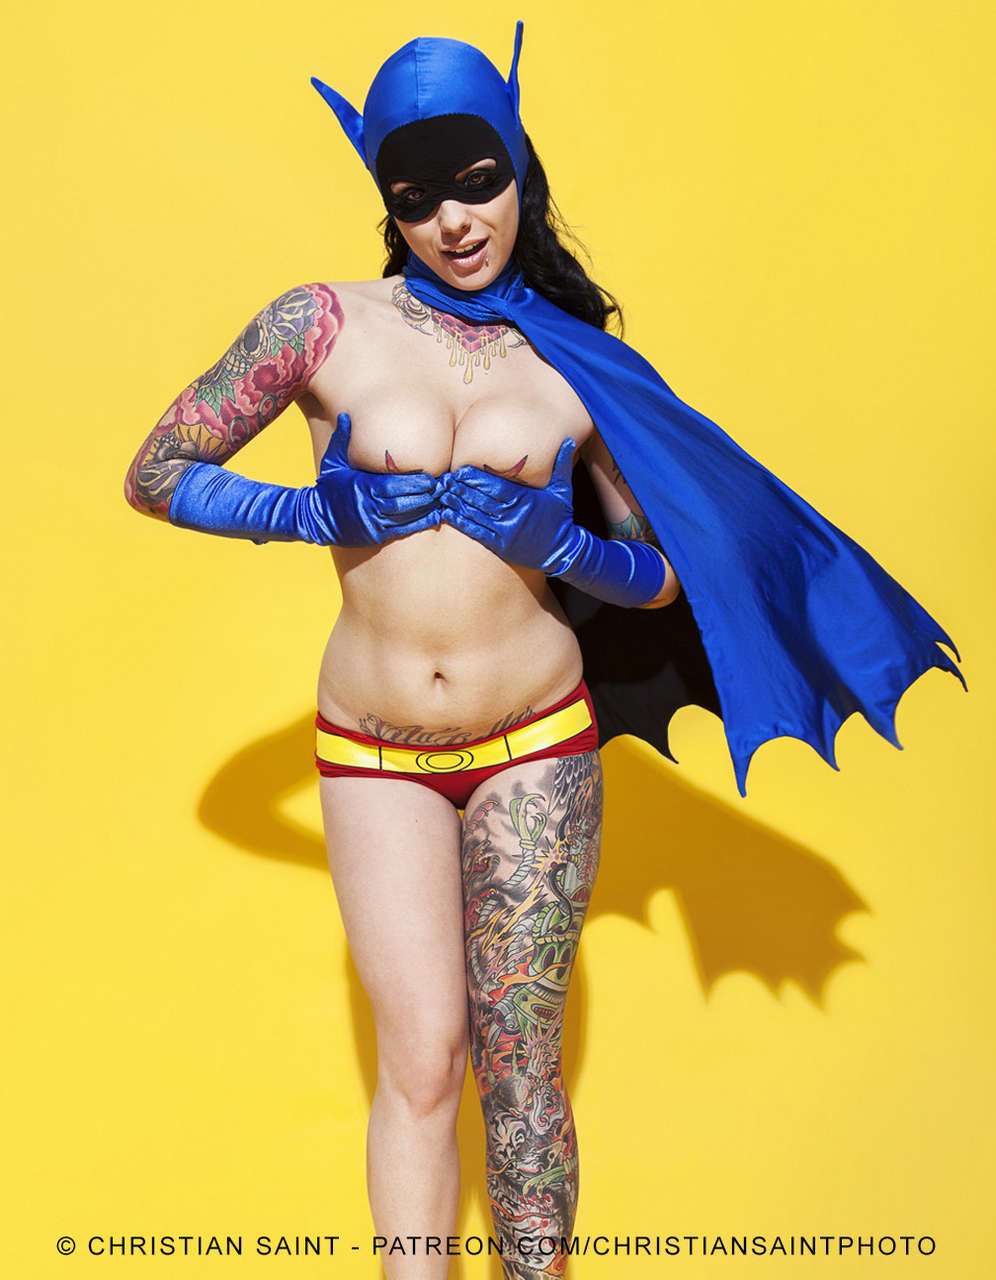 Batgirl Radeosuicid